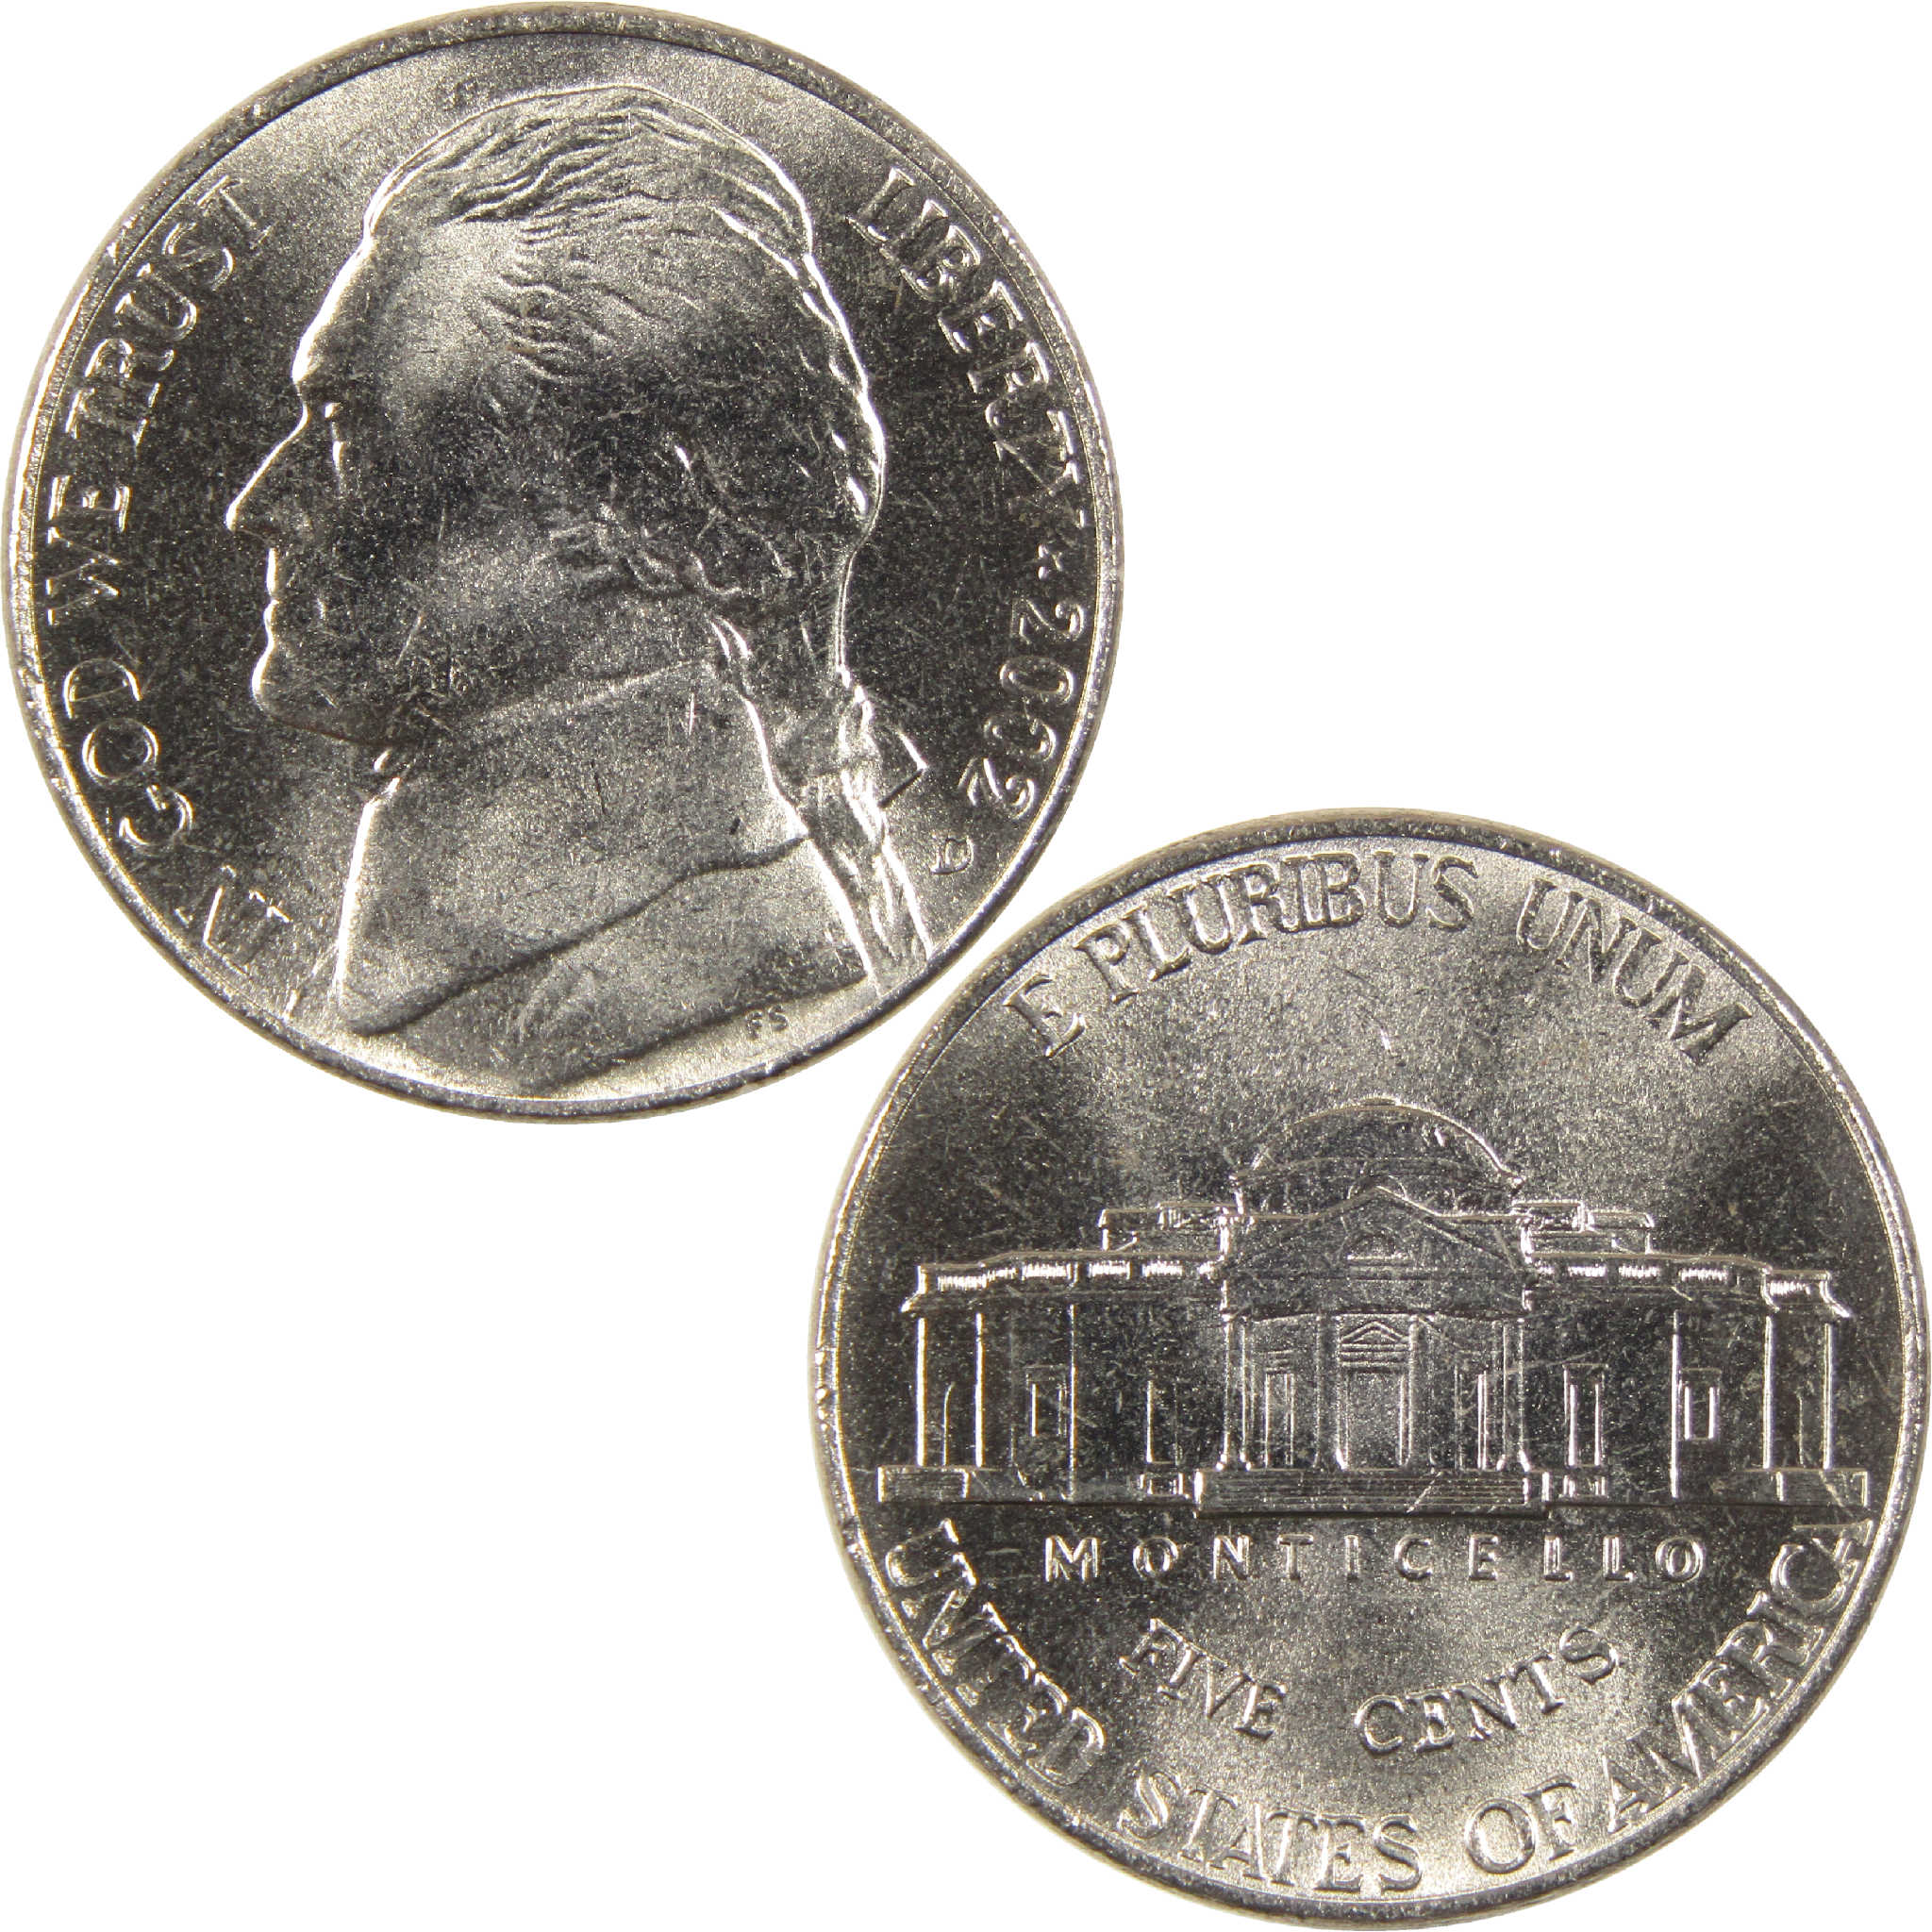 2002 D Jefferson Nickel BU Uncirculated 5c Coin